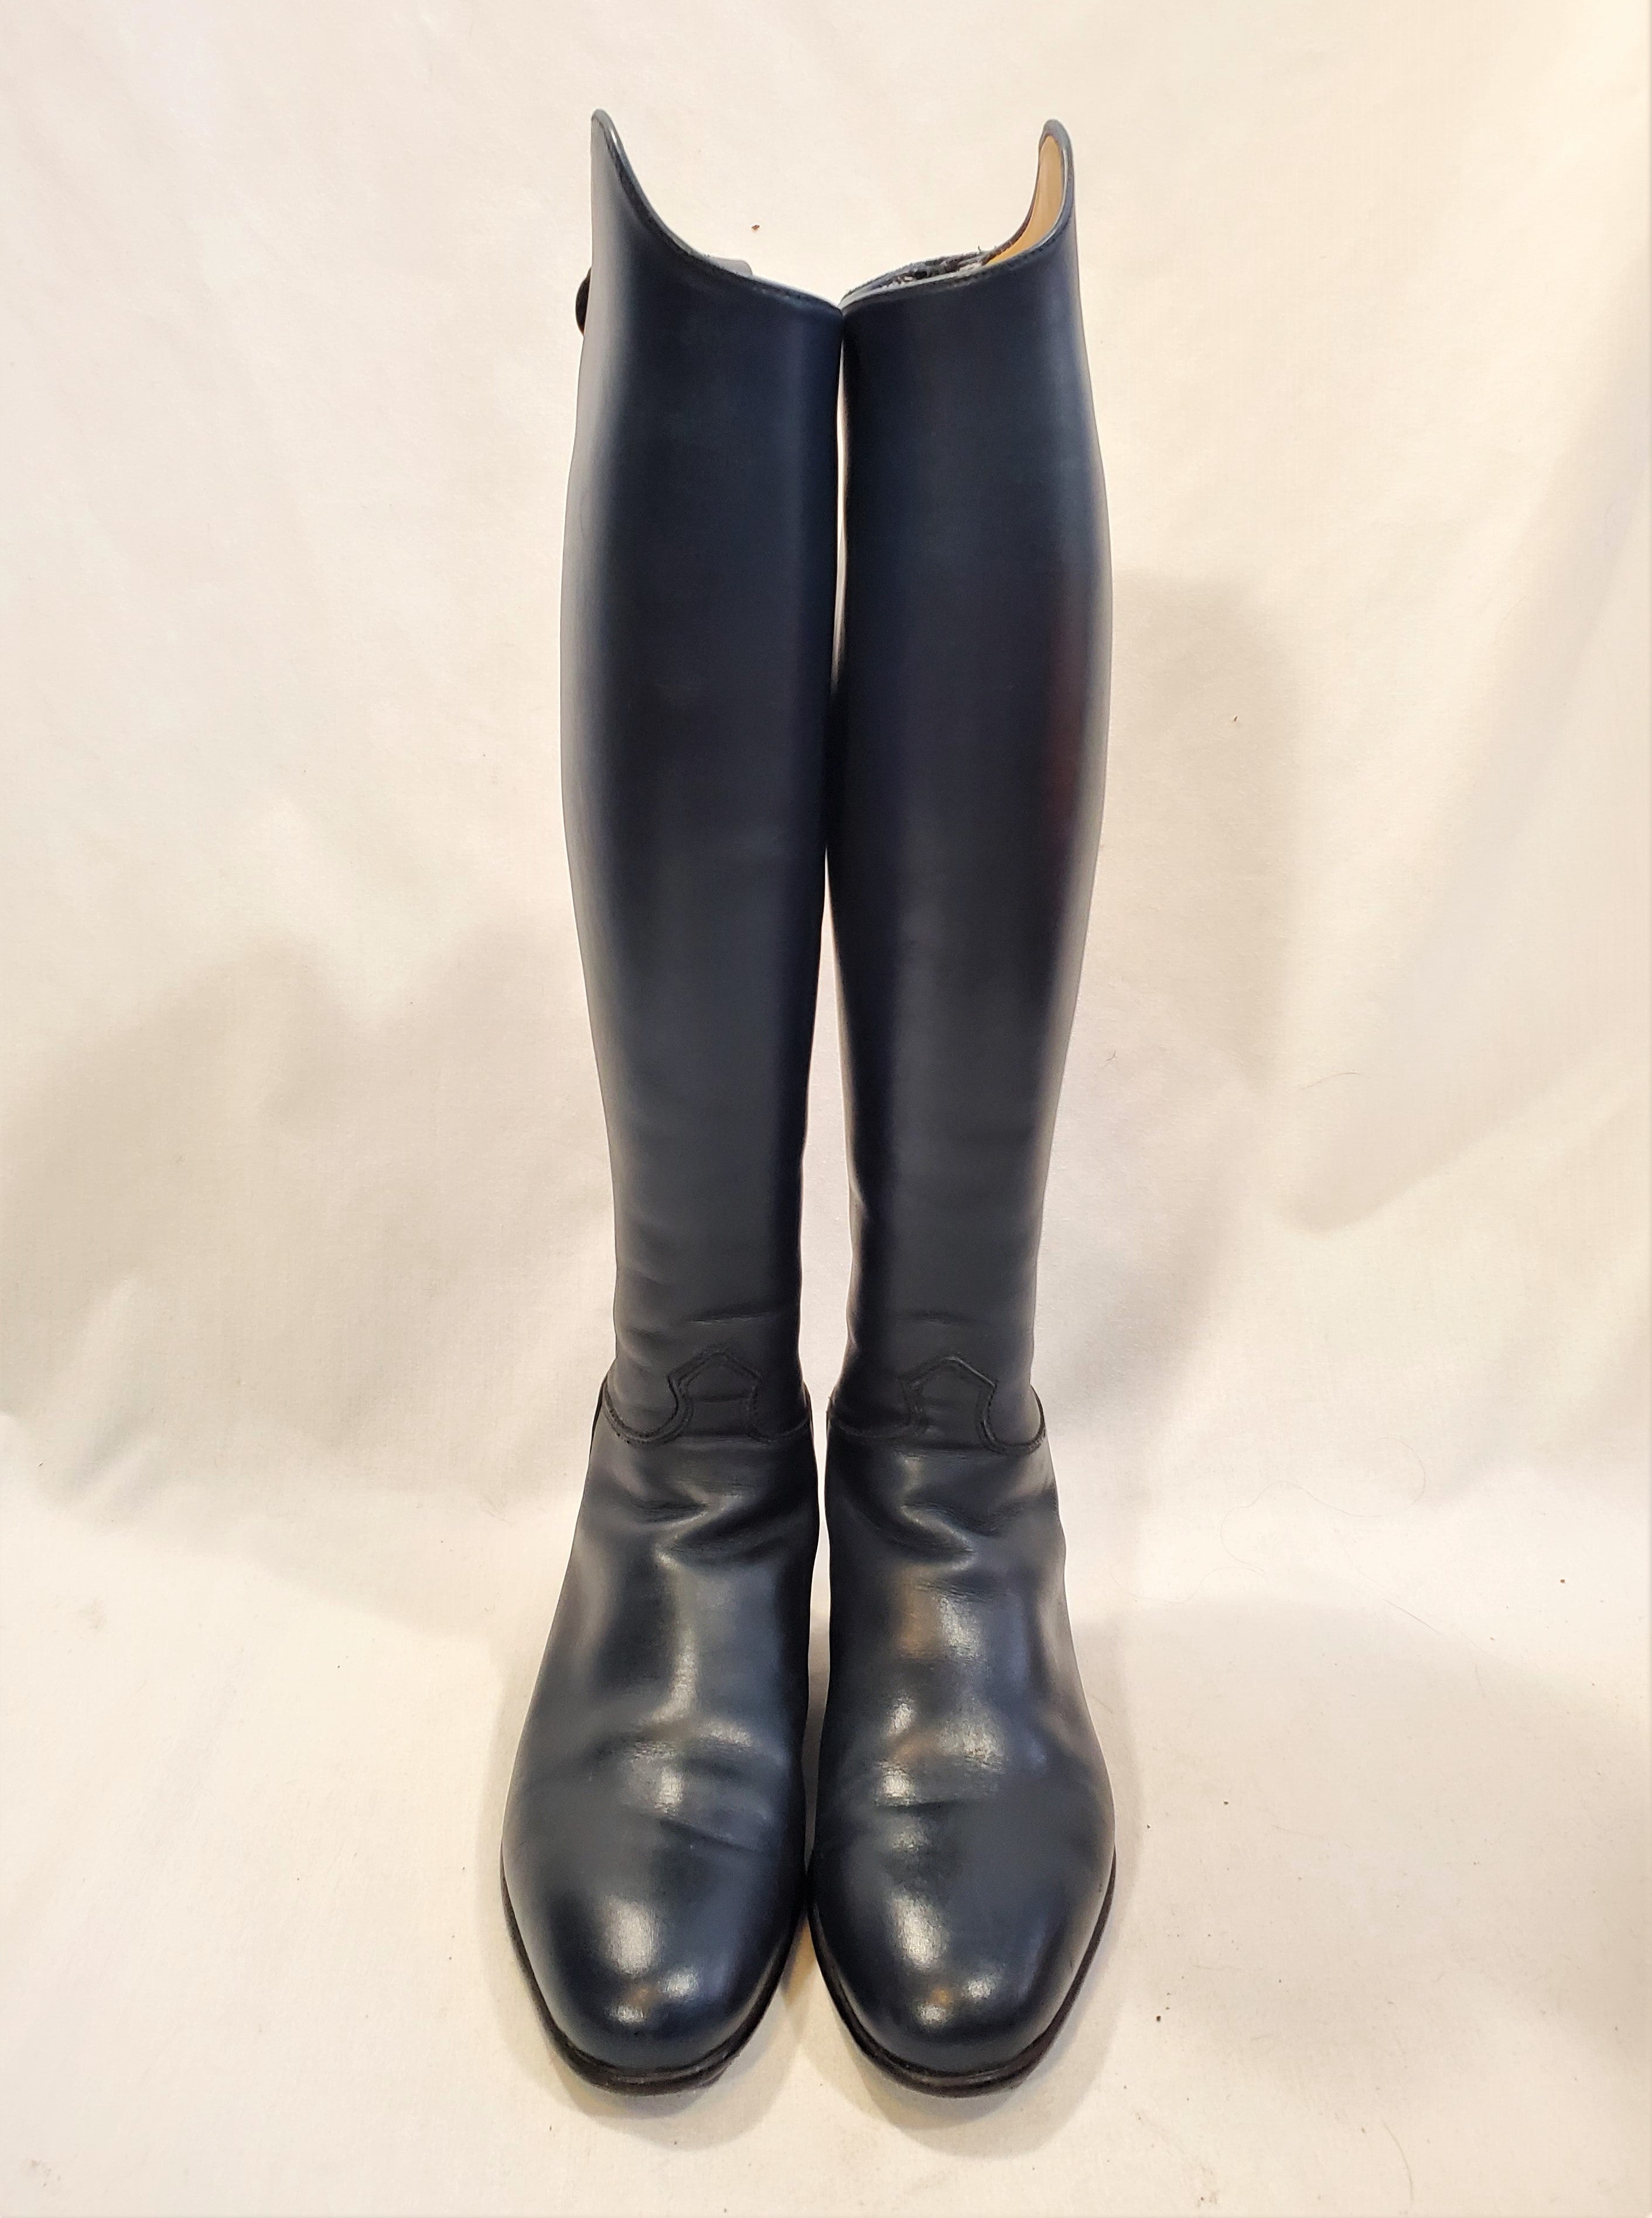 Konig Custom Dress Boots (Indigo Blue) - Women's 6.5/7 Tall